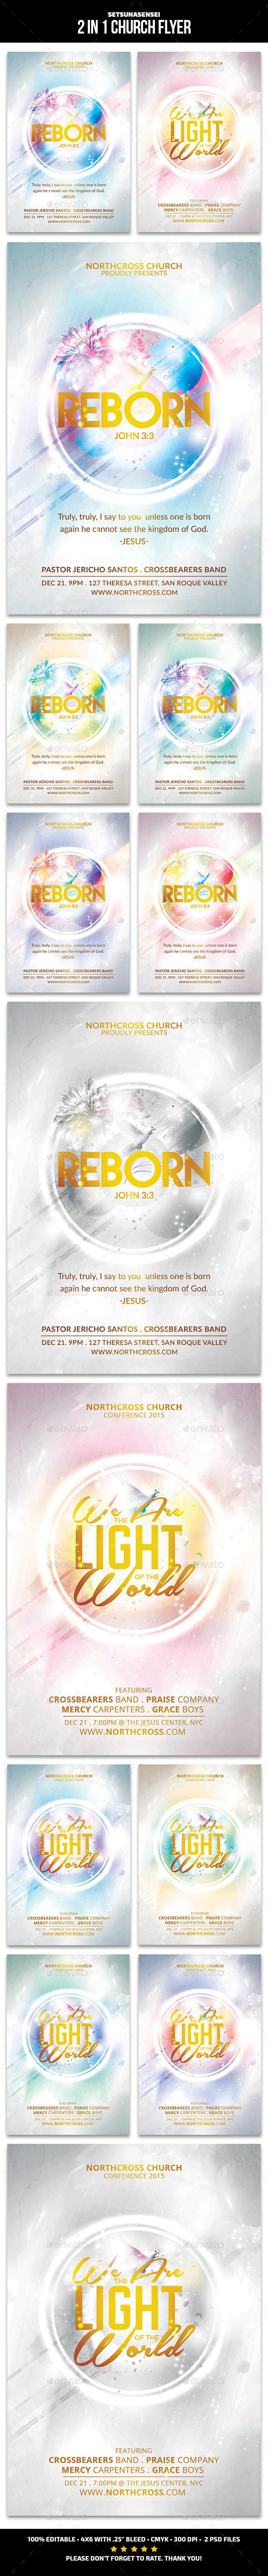 Reborn Church Flyer